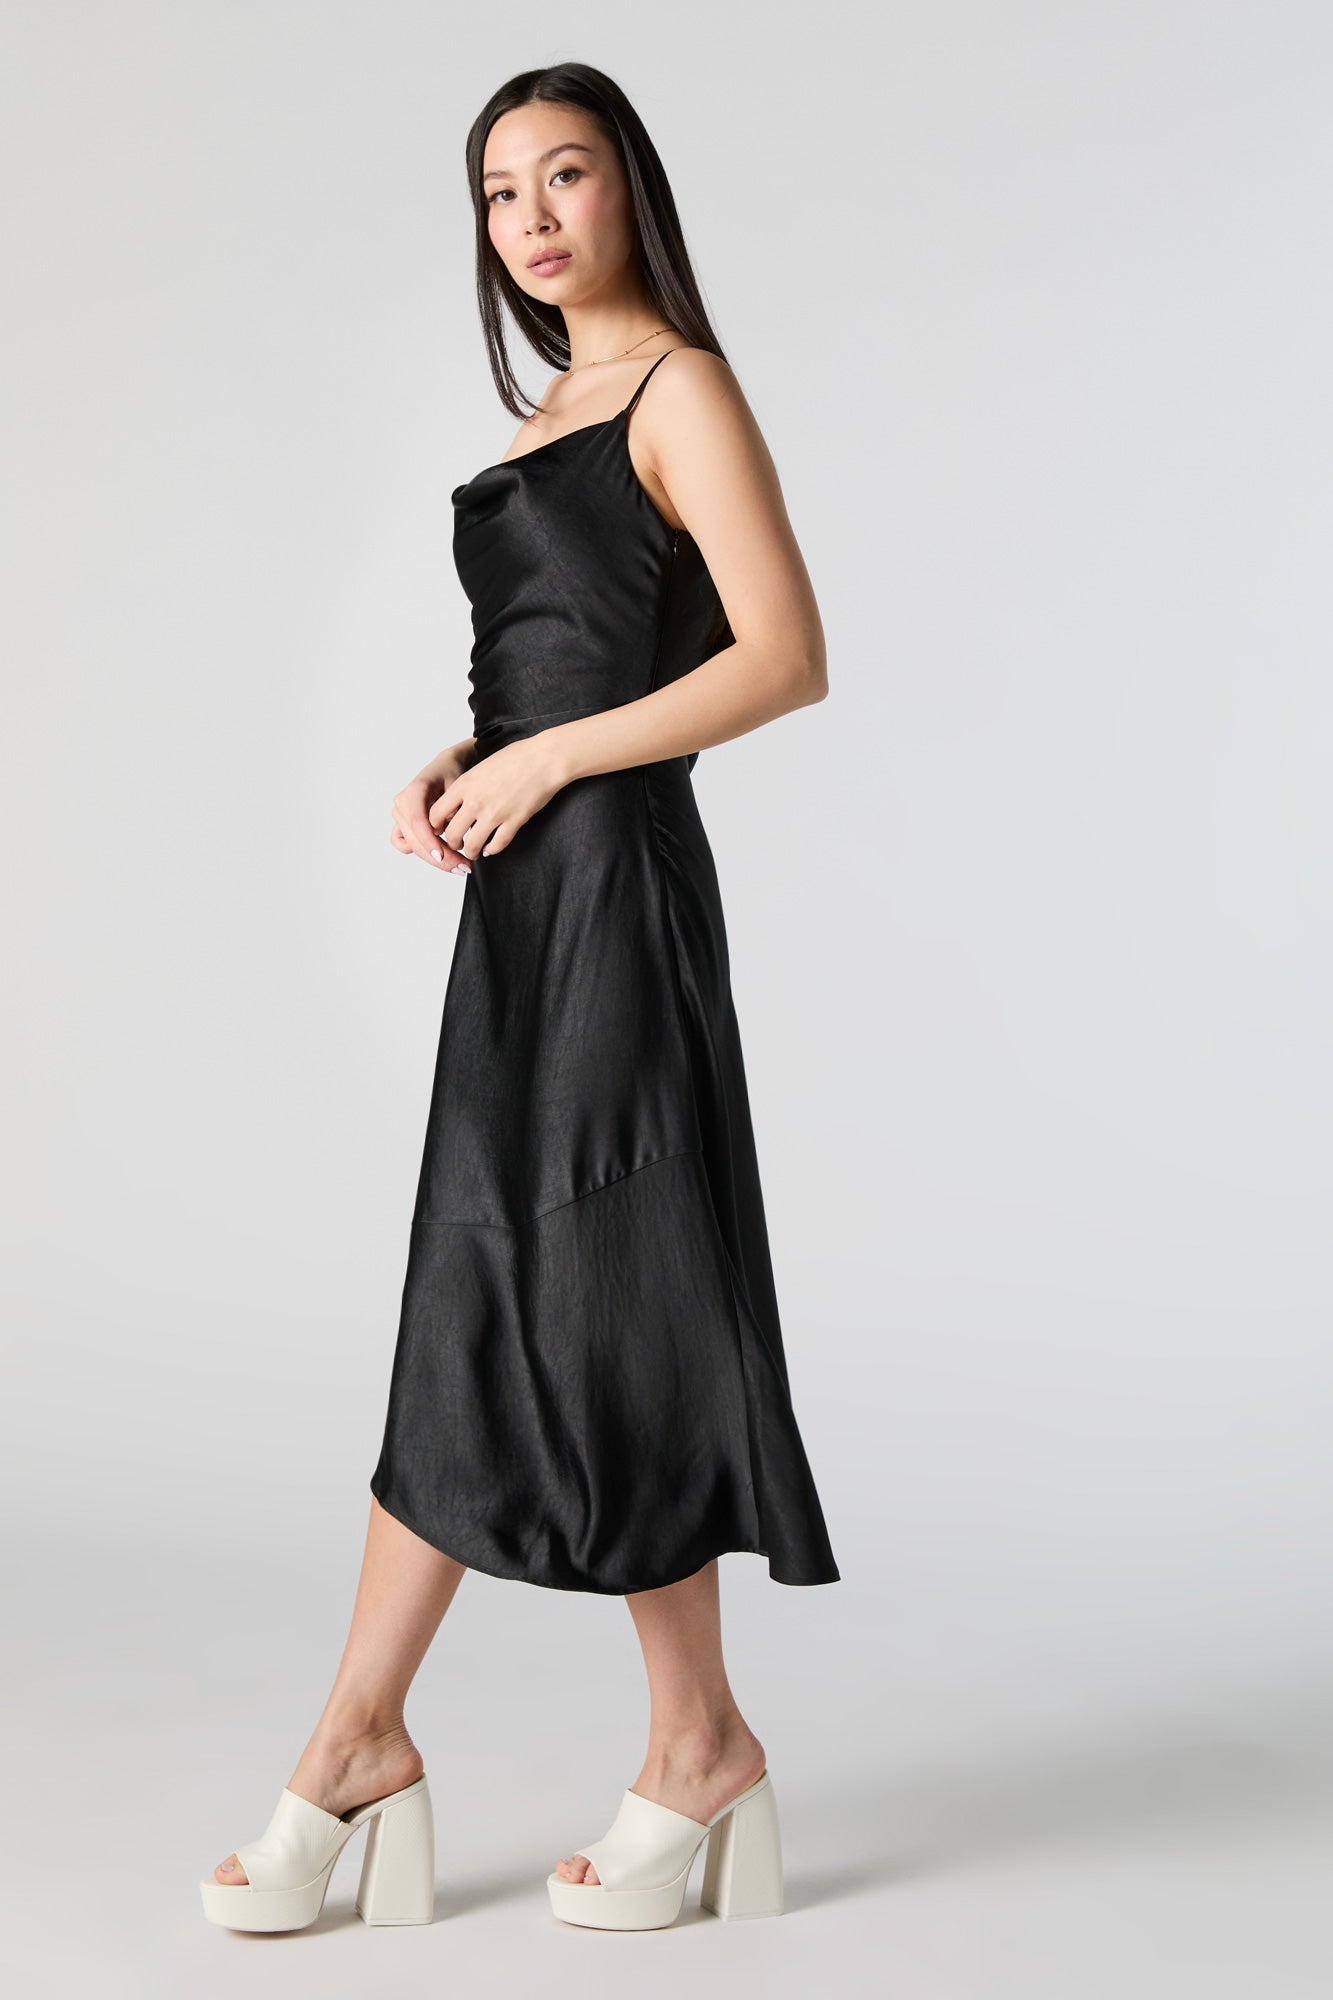 Satin Cowl Neck Asymmetrical Midi Dress